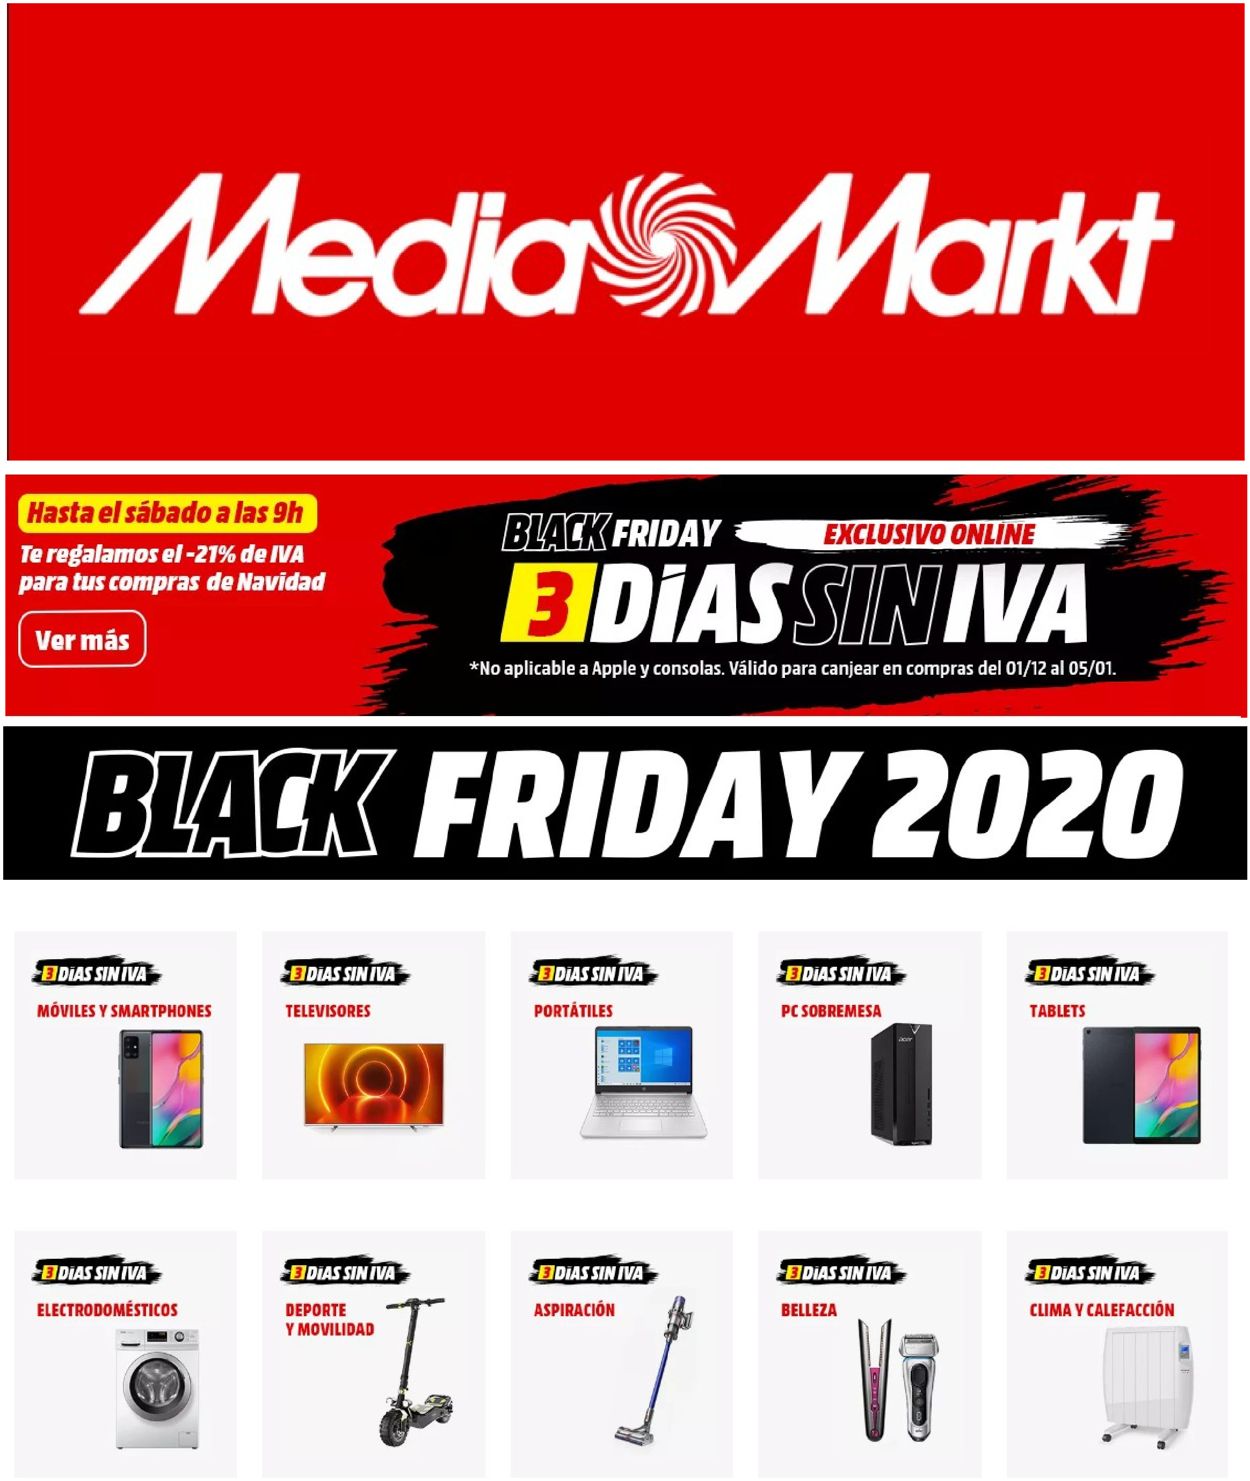 George Eliot Ligeramente esponja Catálogo Media Markt - Black Friday 2020 - Actual 13.11 - 19.11.2020 | Yulak